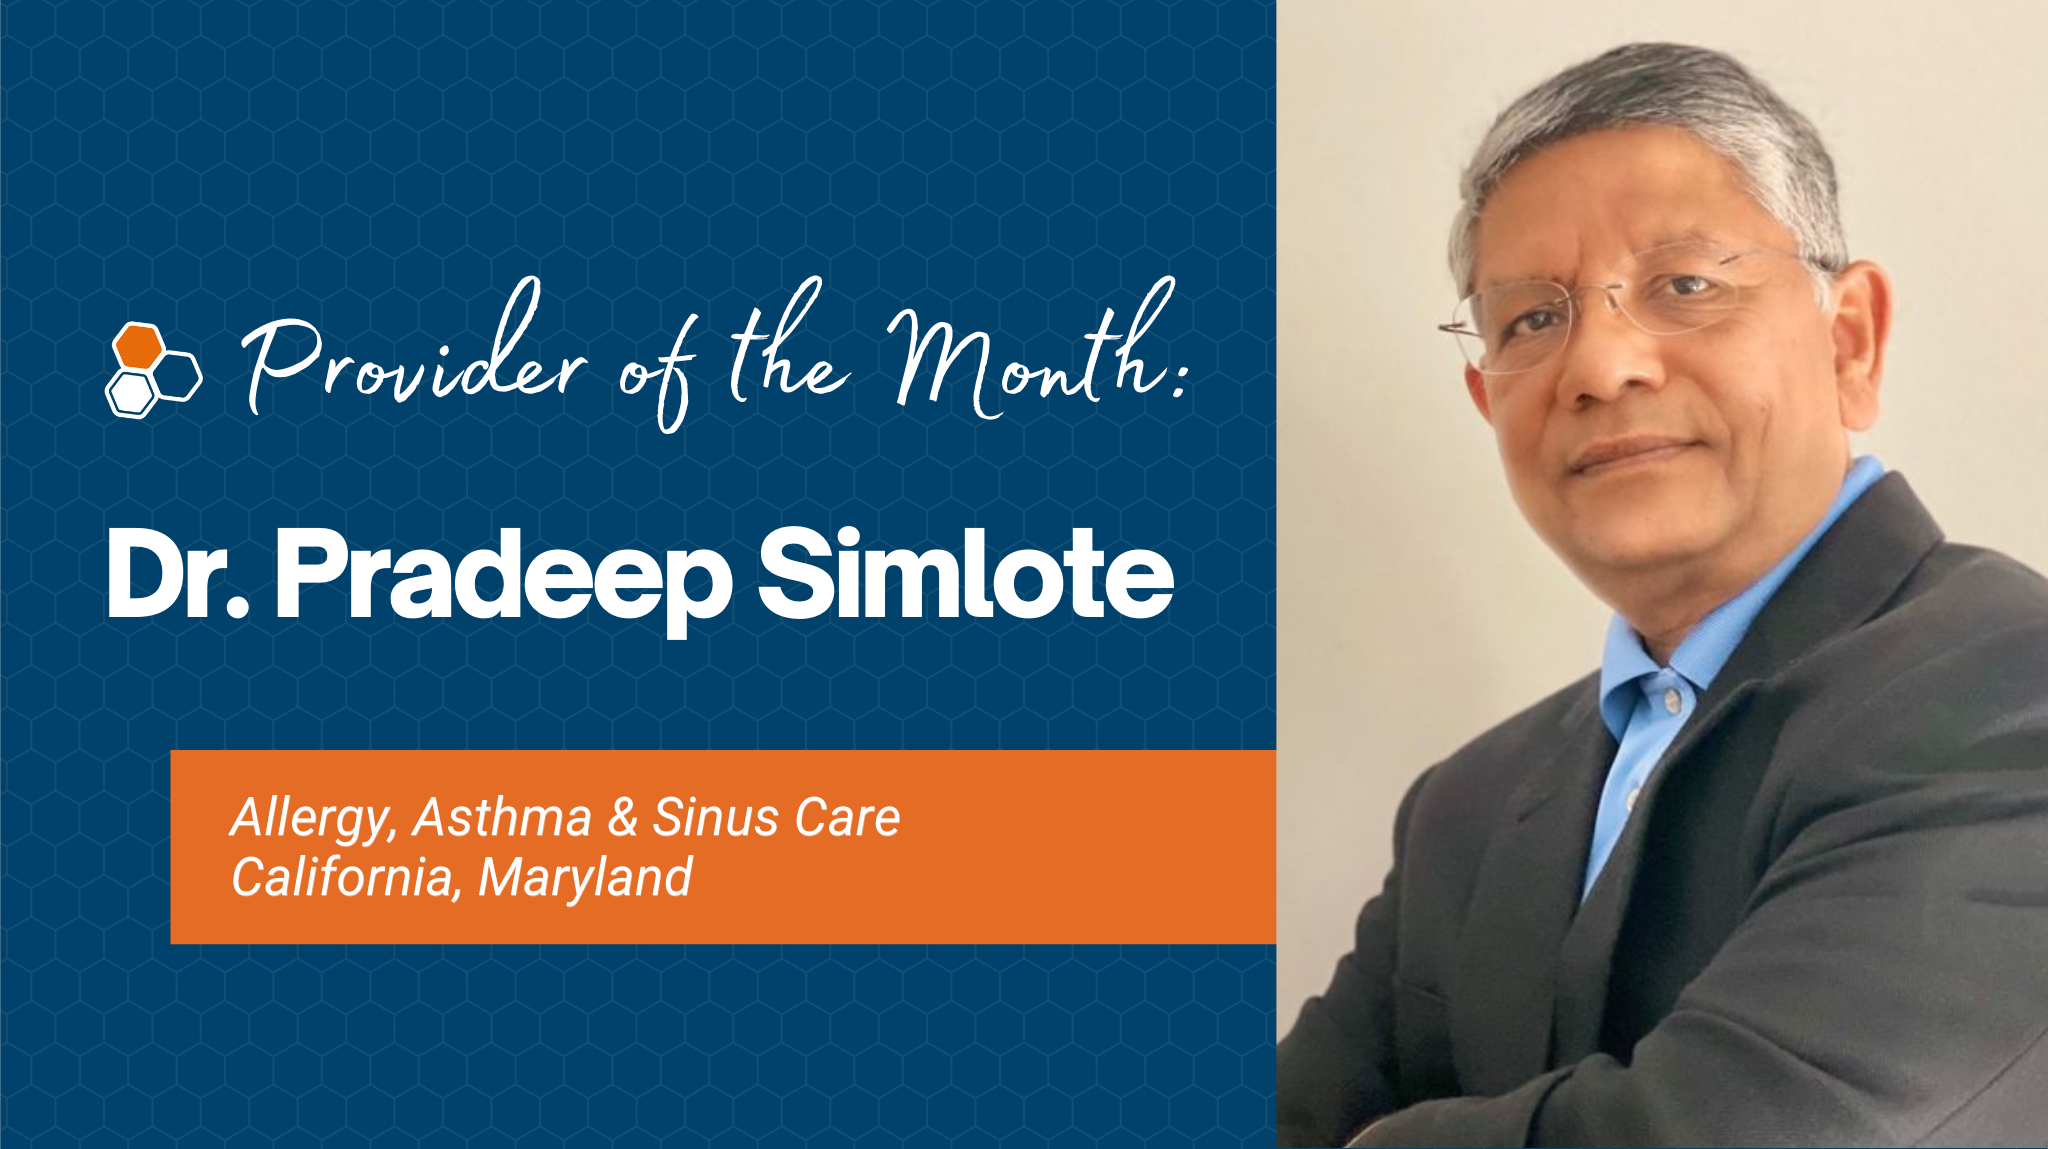 Dr. Pradeep Simlote Provider of the Month